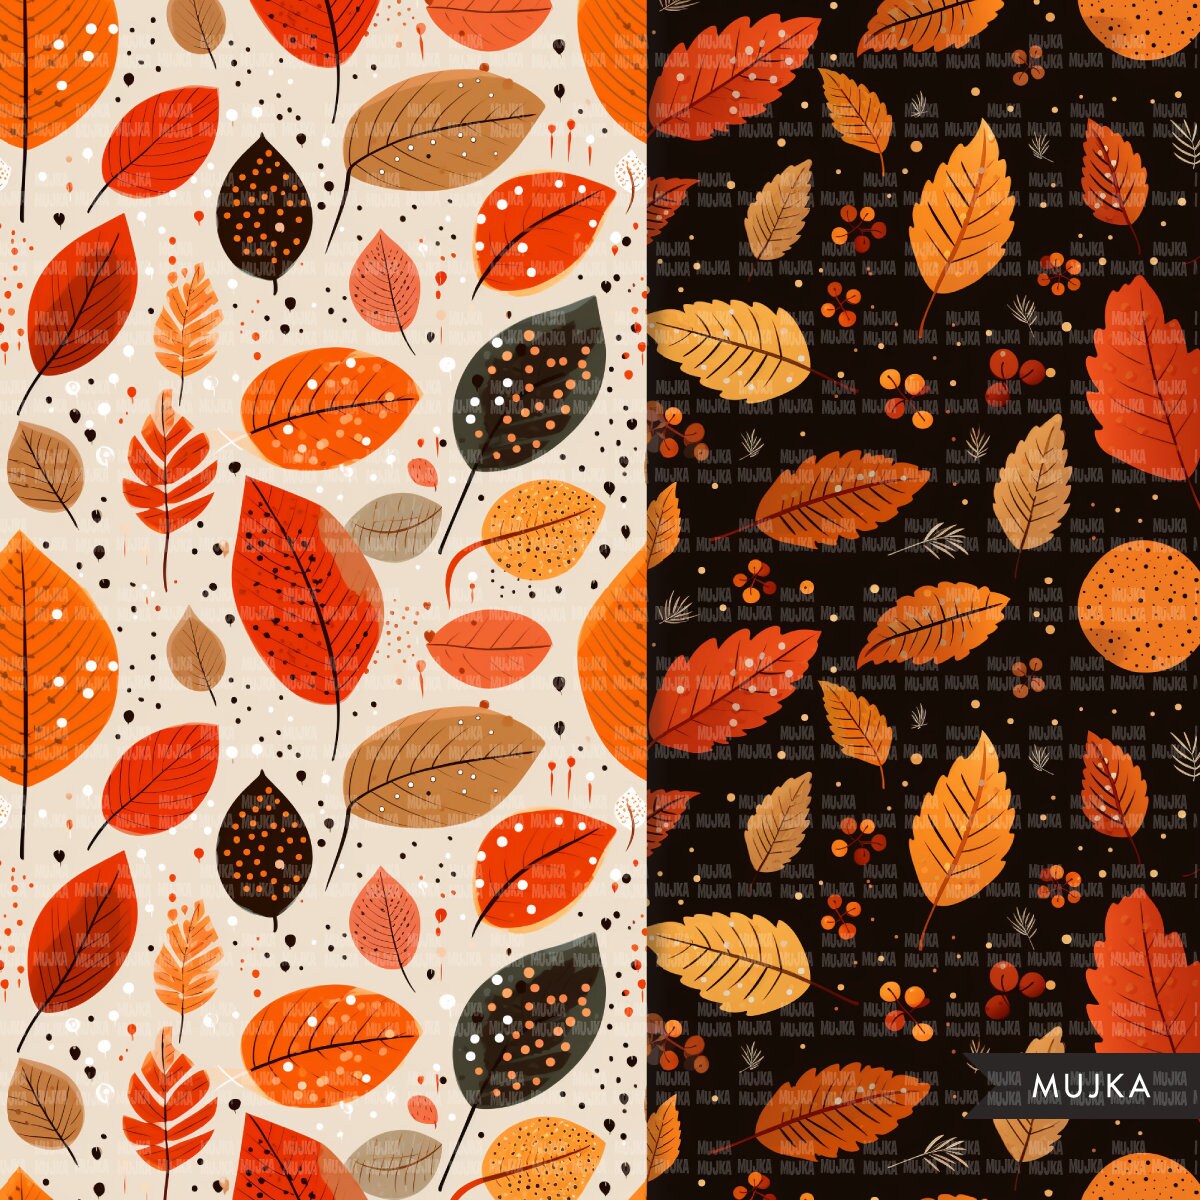 Fall leaves Digital papers, Autumn seamless patterns, leaves printable pattern, digital background, fall leaves png, fall background